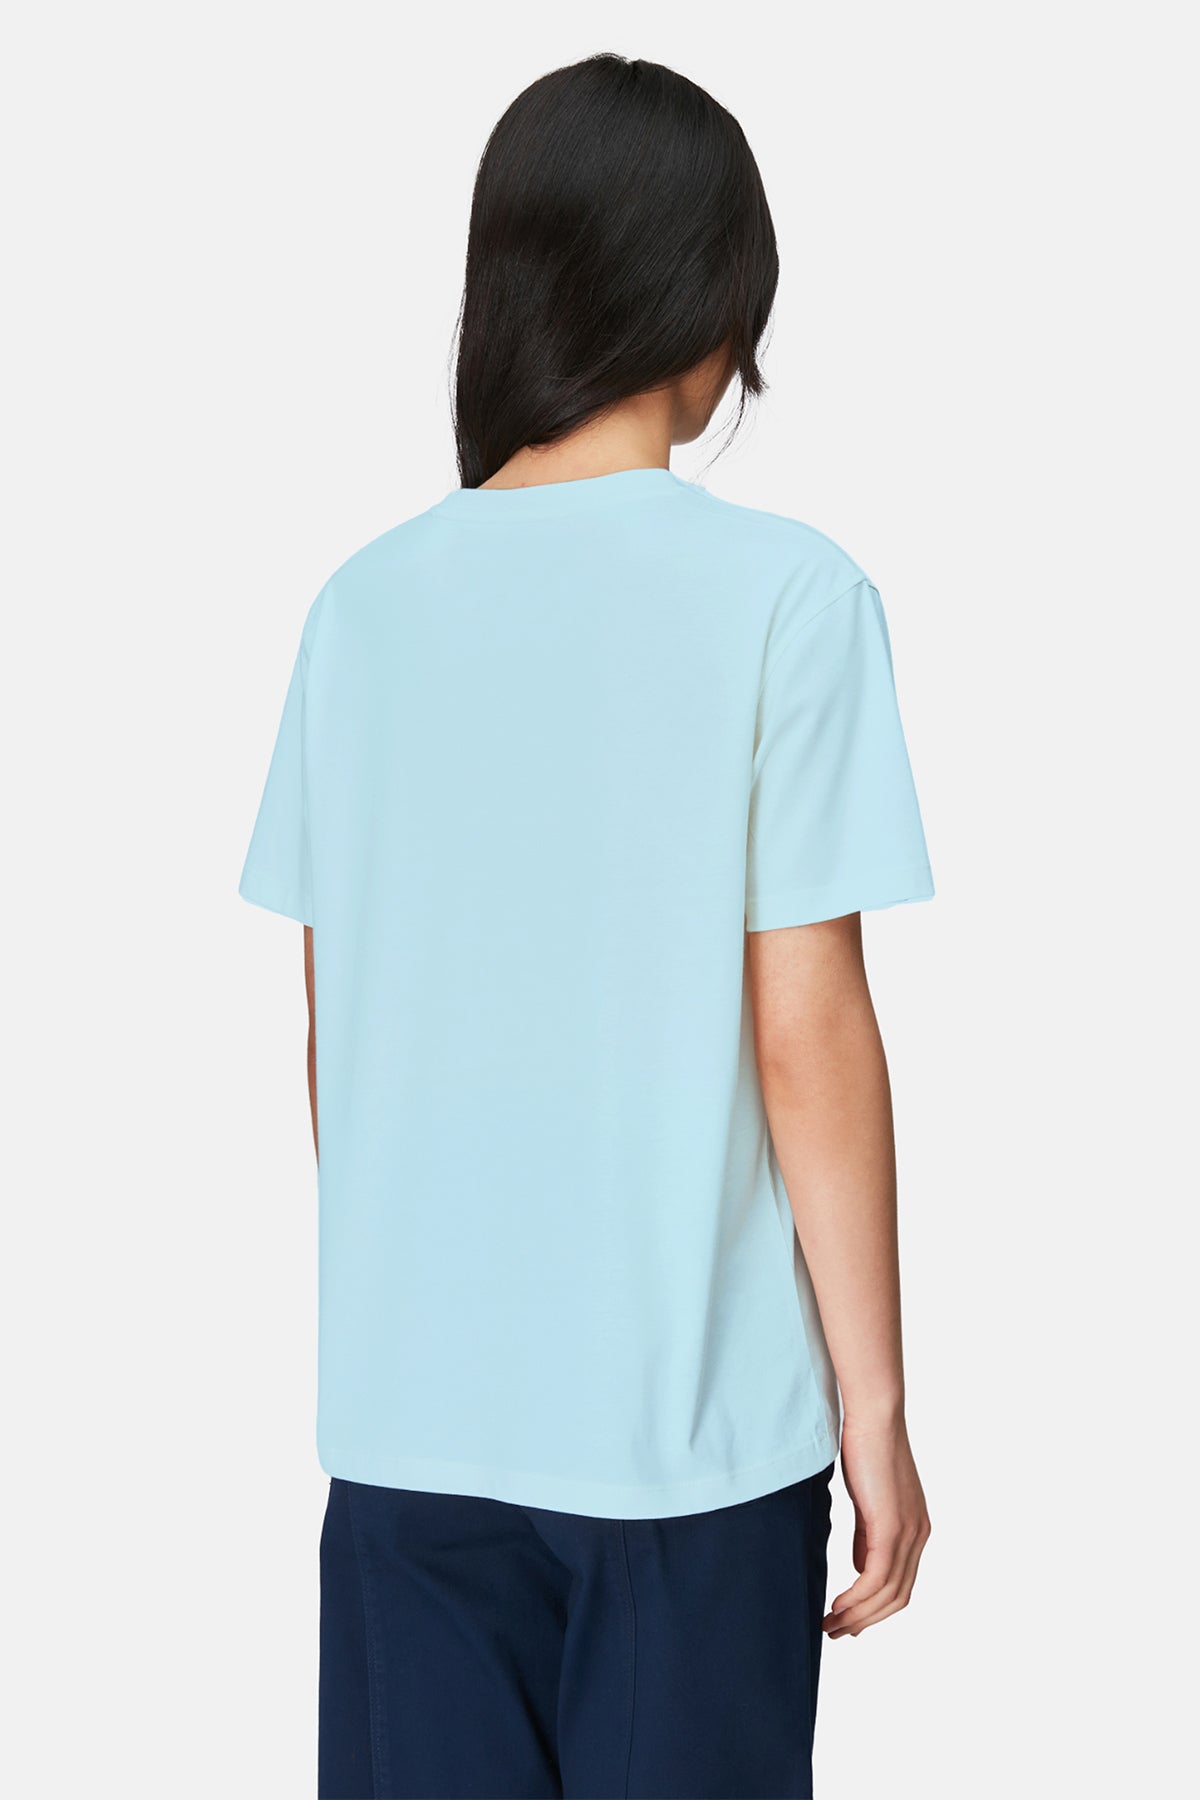 Yavru İmparator Penguen Light-Weight T-shirt - Mint Mavi